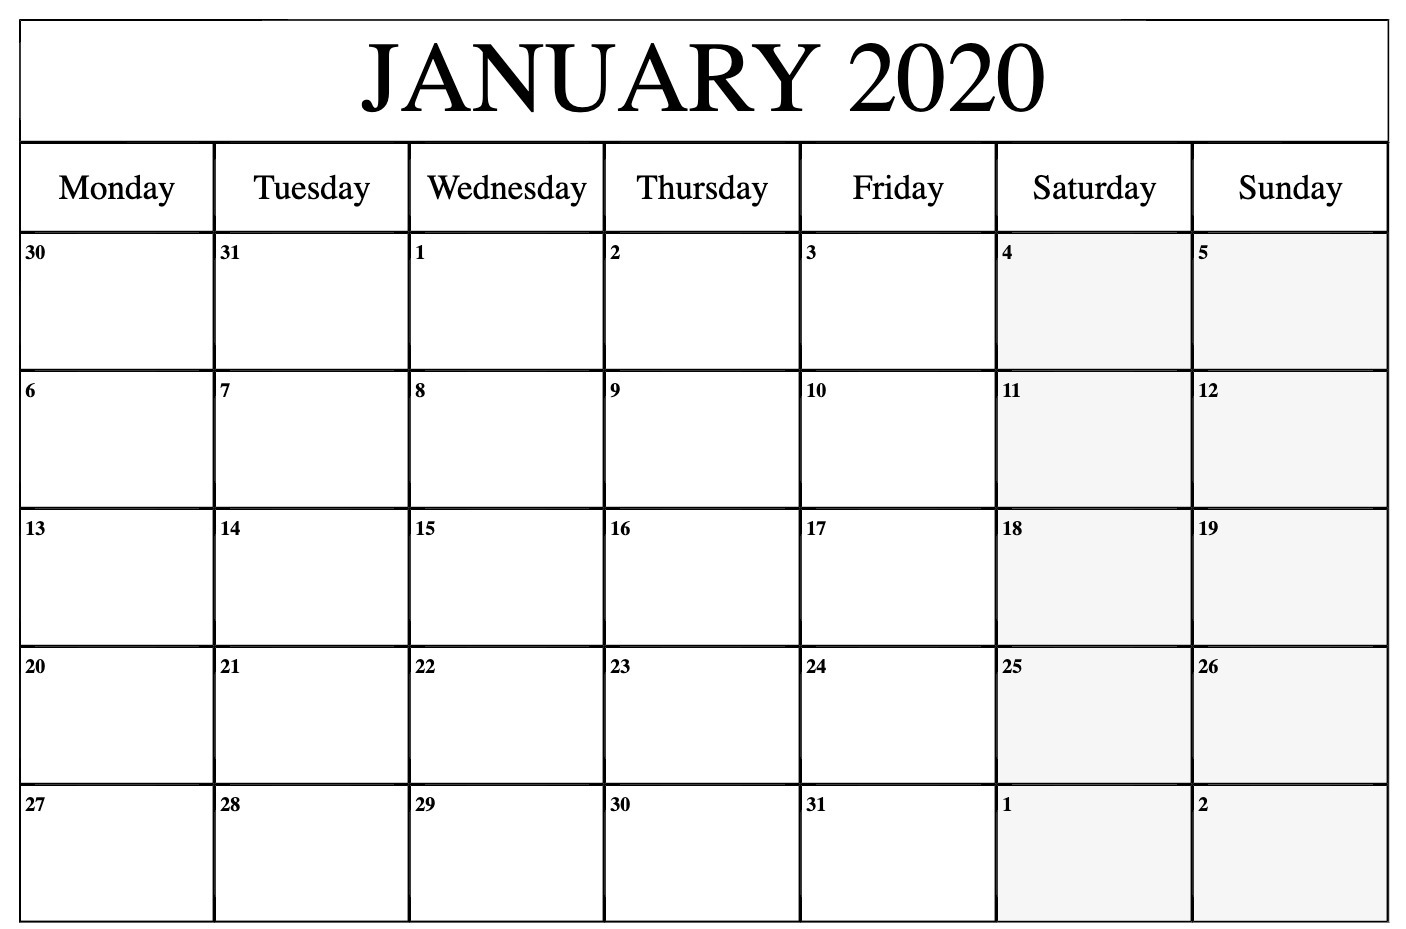 January 2020 Calendar Blank Template